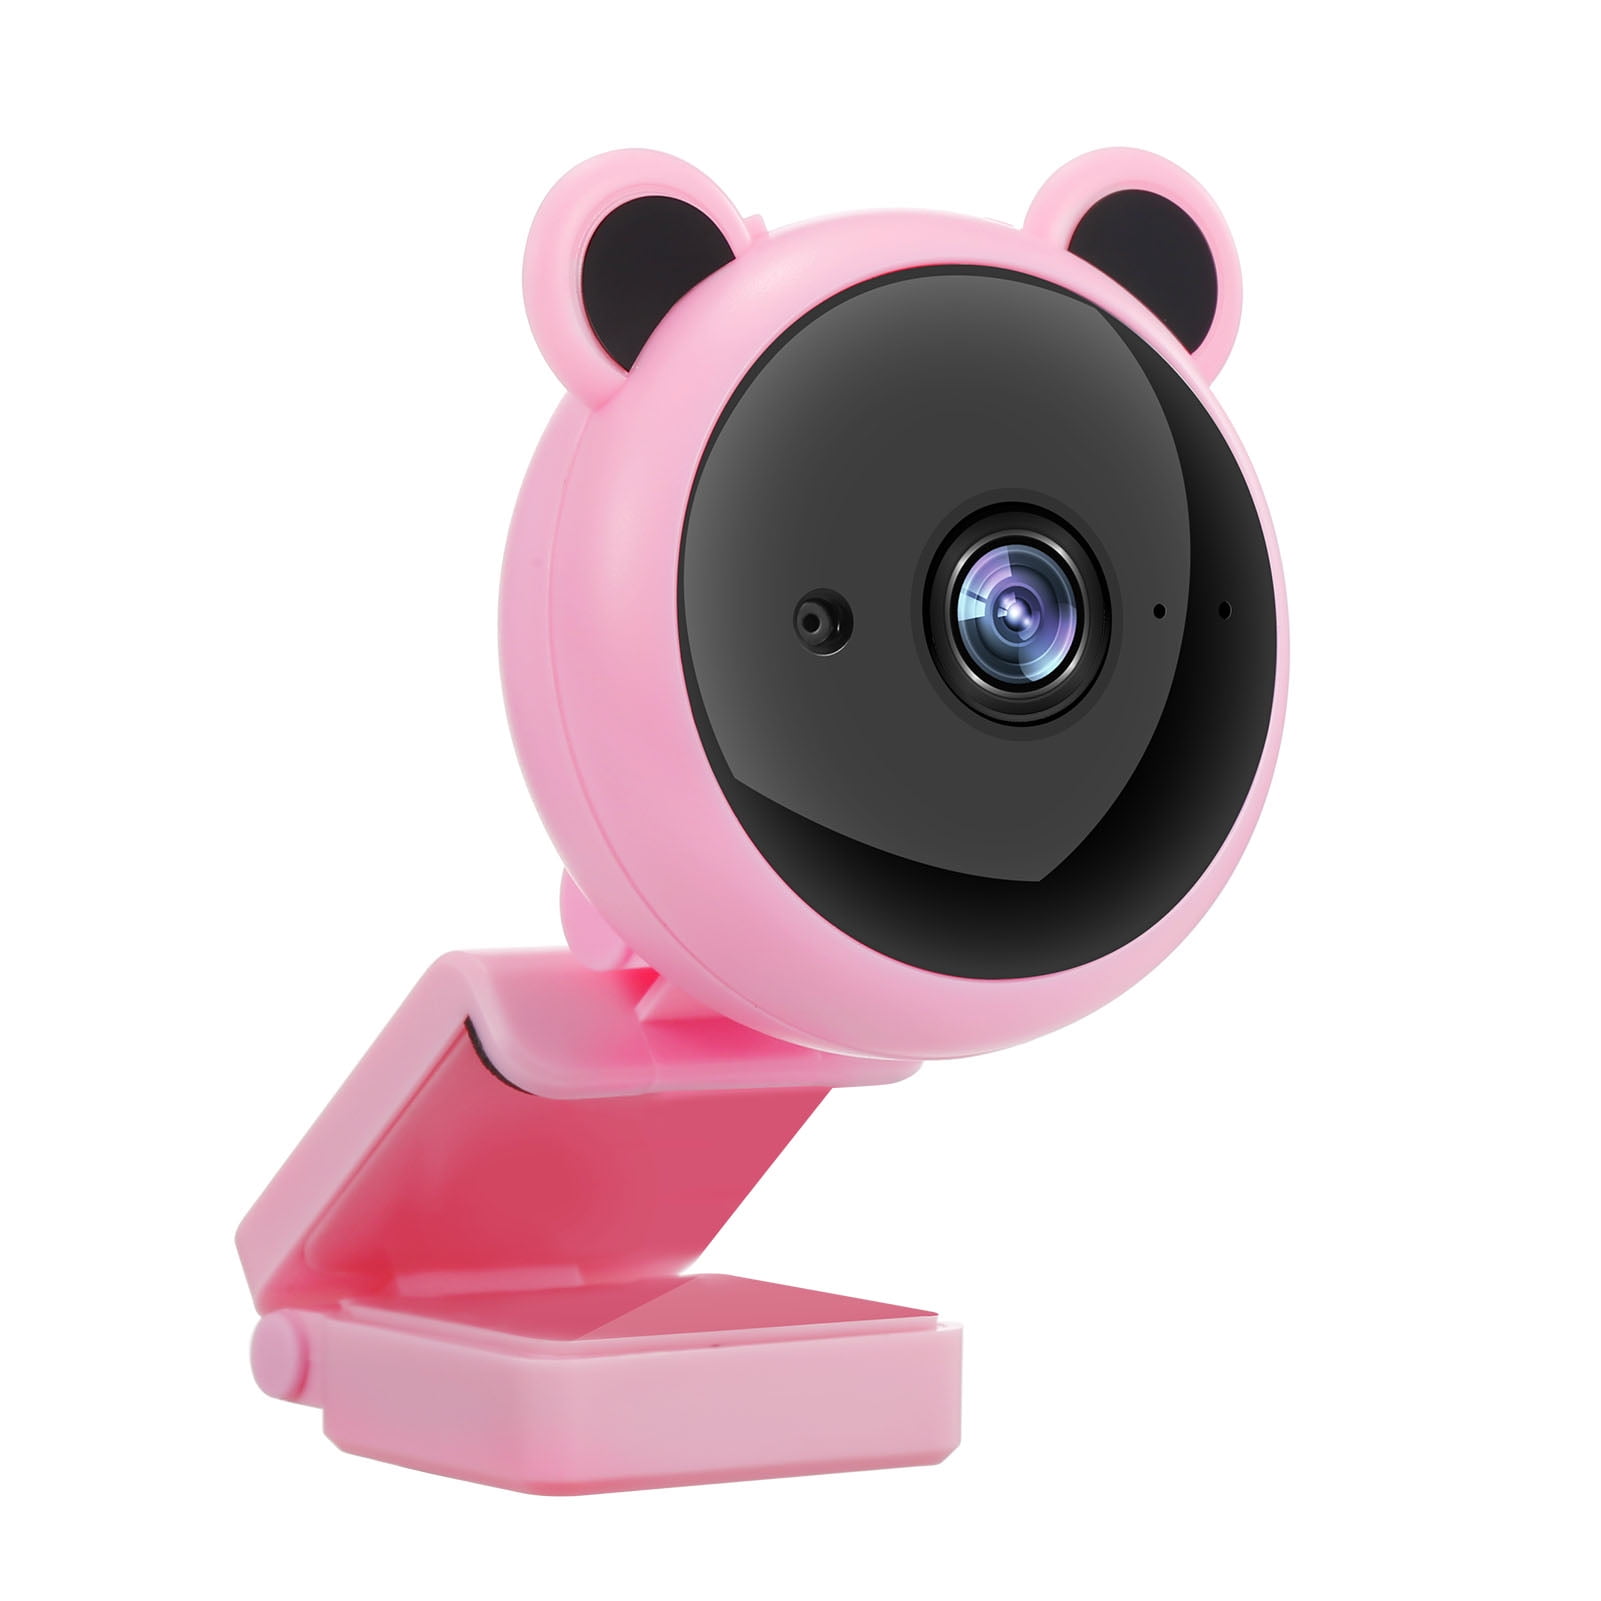 Aibecy Webcam Web-Camera Built-in Sound Gaming Microphone Computer Webcam for PC Desktop & Laptop for Online Lesson 